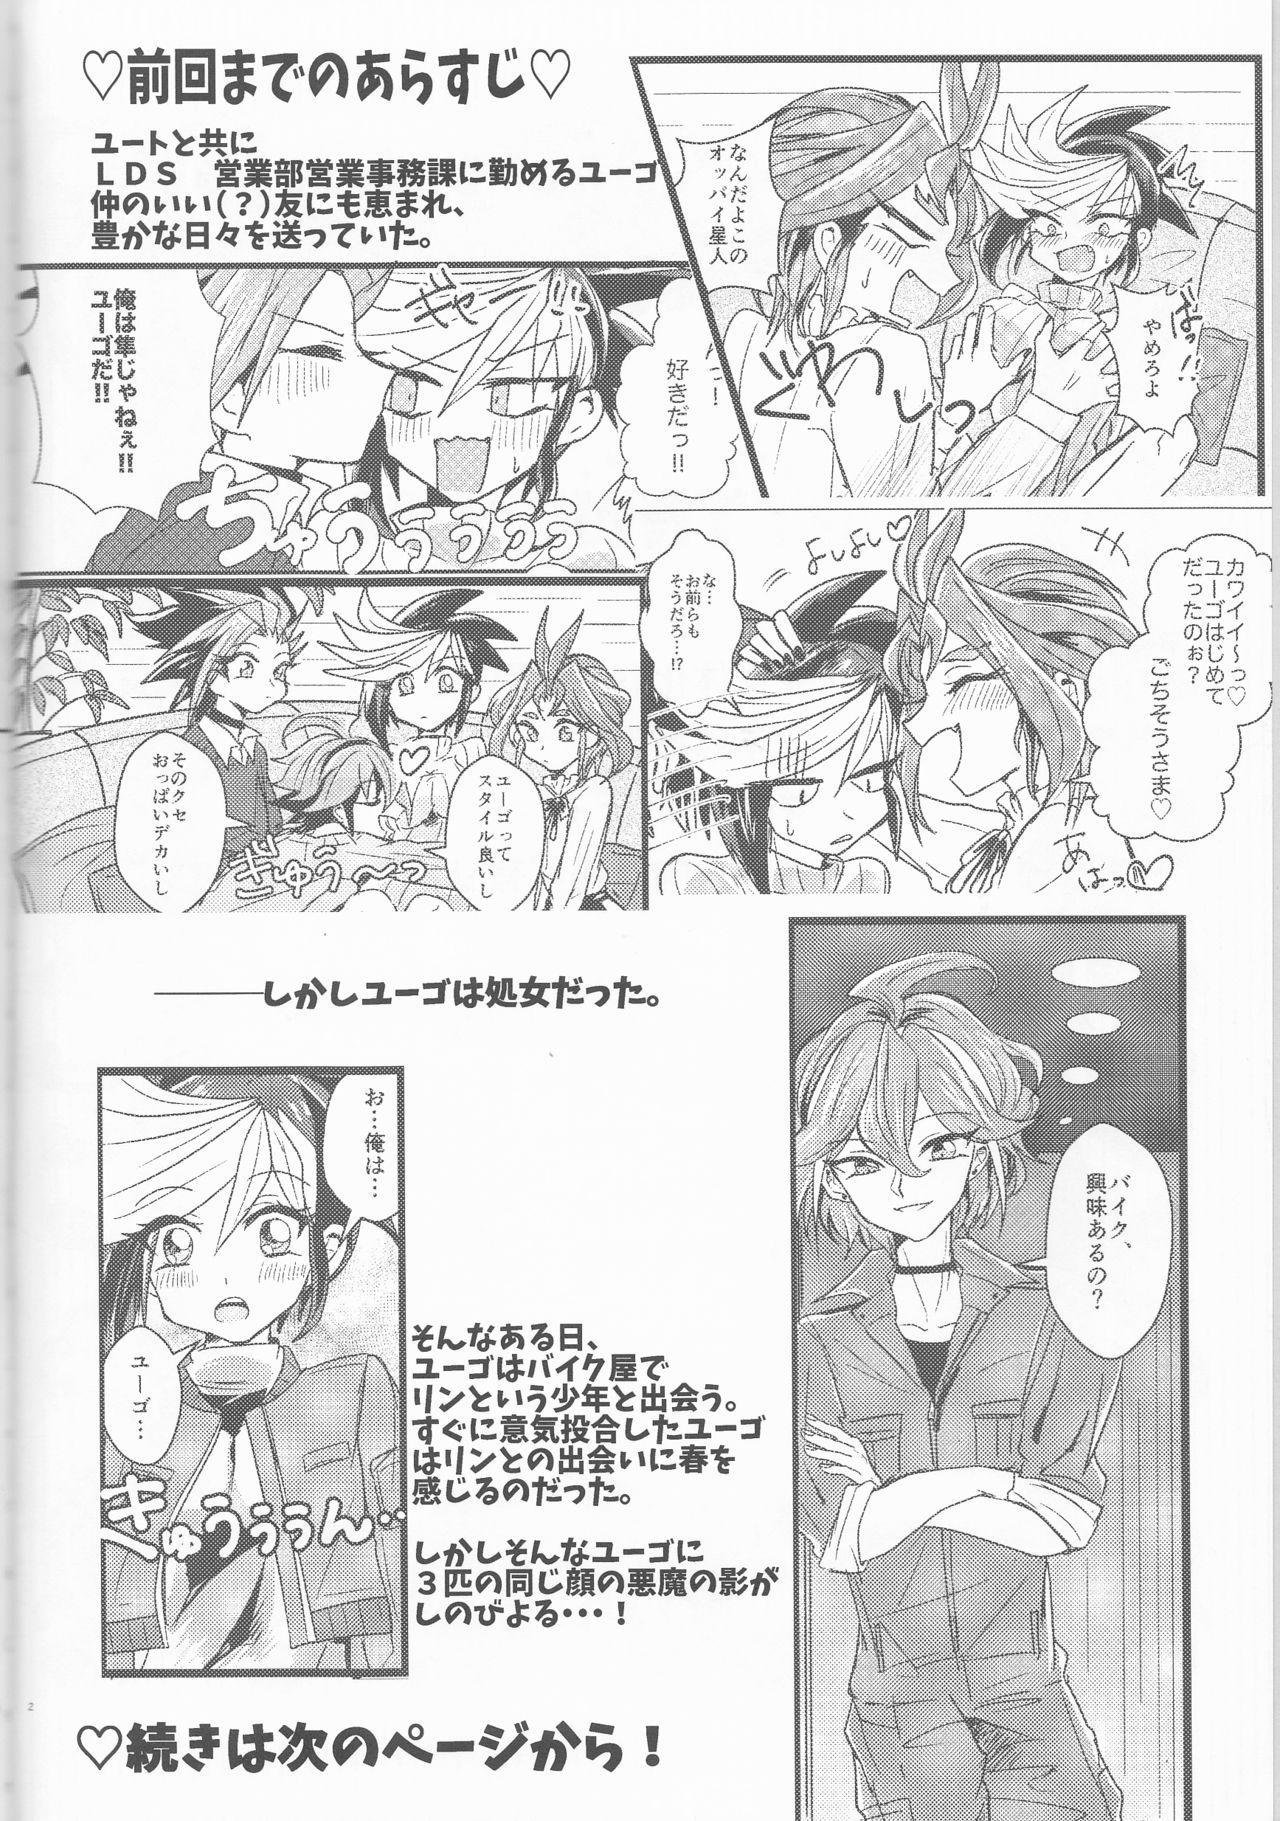 Sharing LDS Hishoka no Himitsu II - Yu-gi-oh arc-v Goldenshower - Page 3